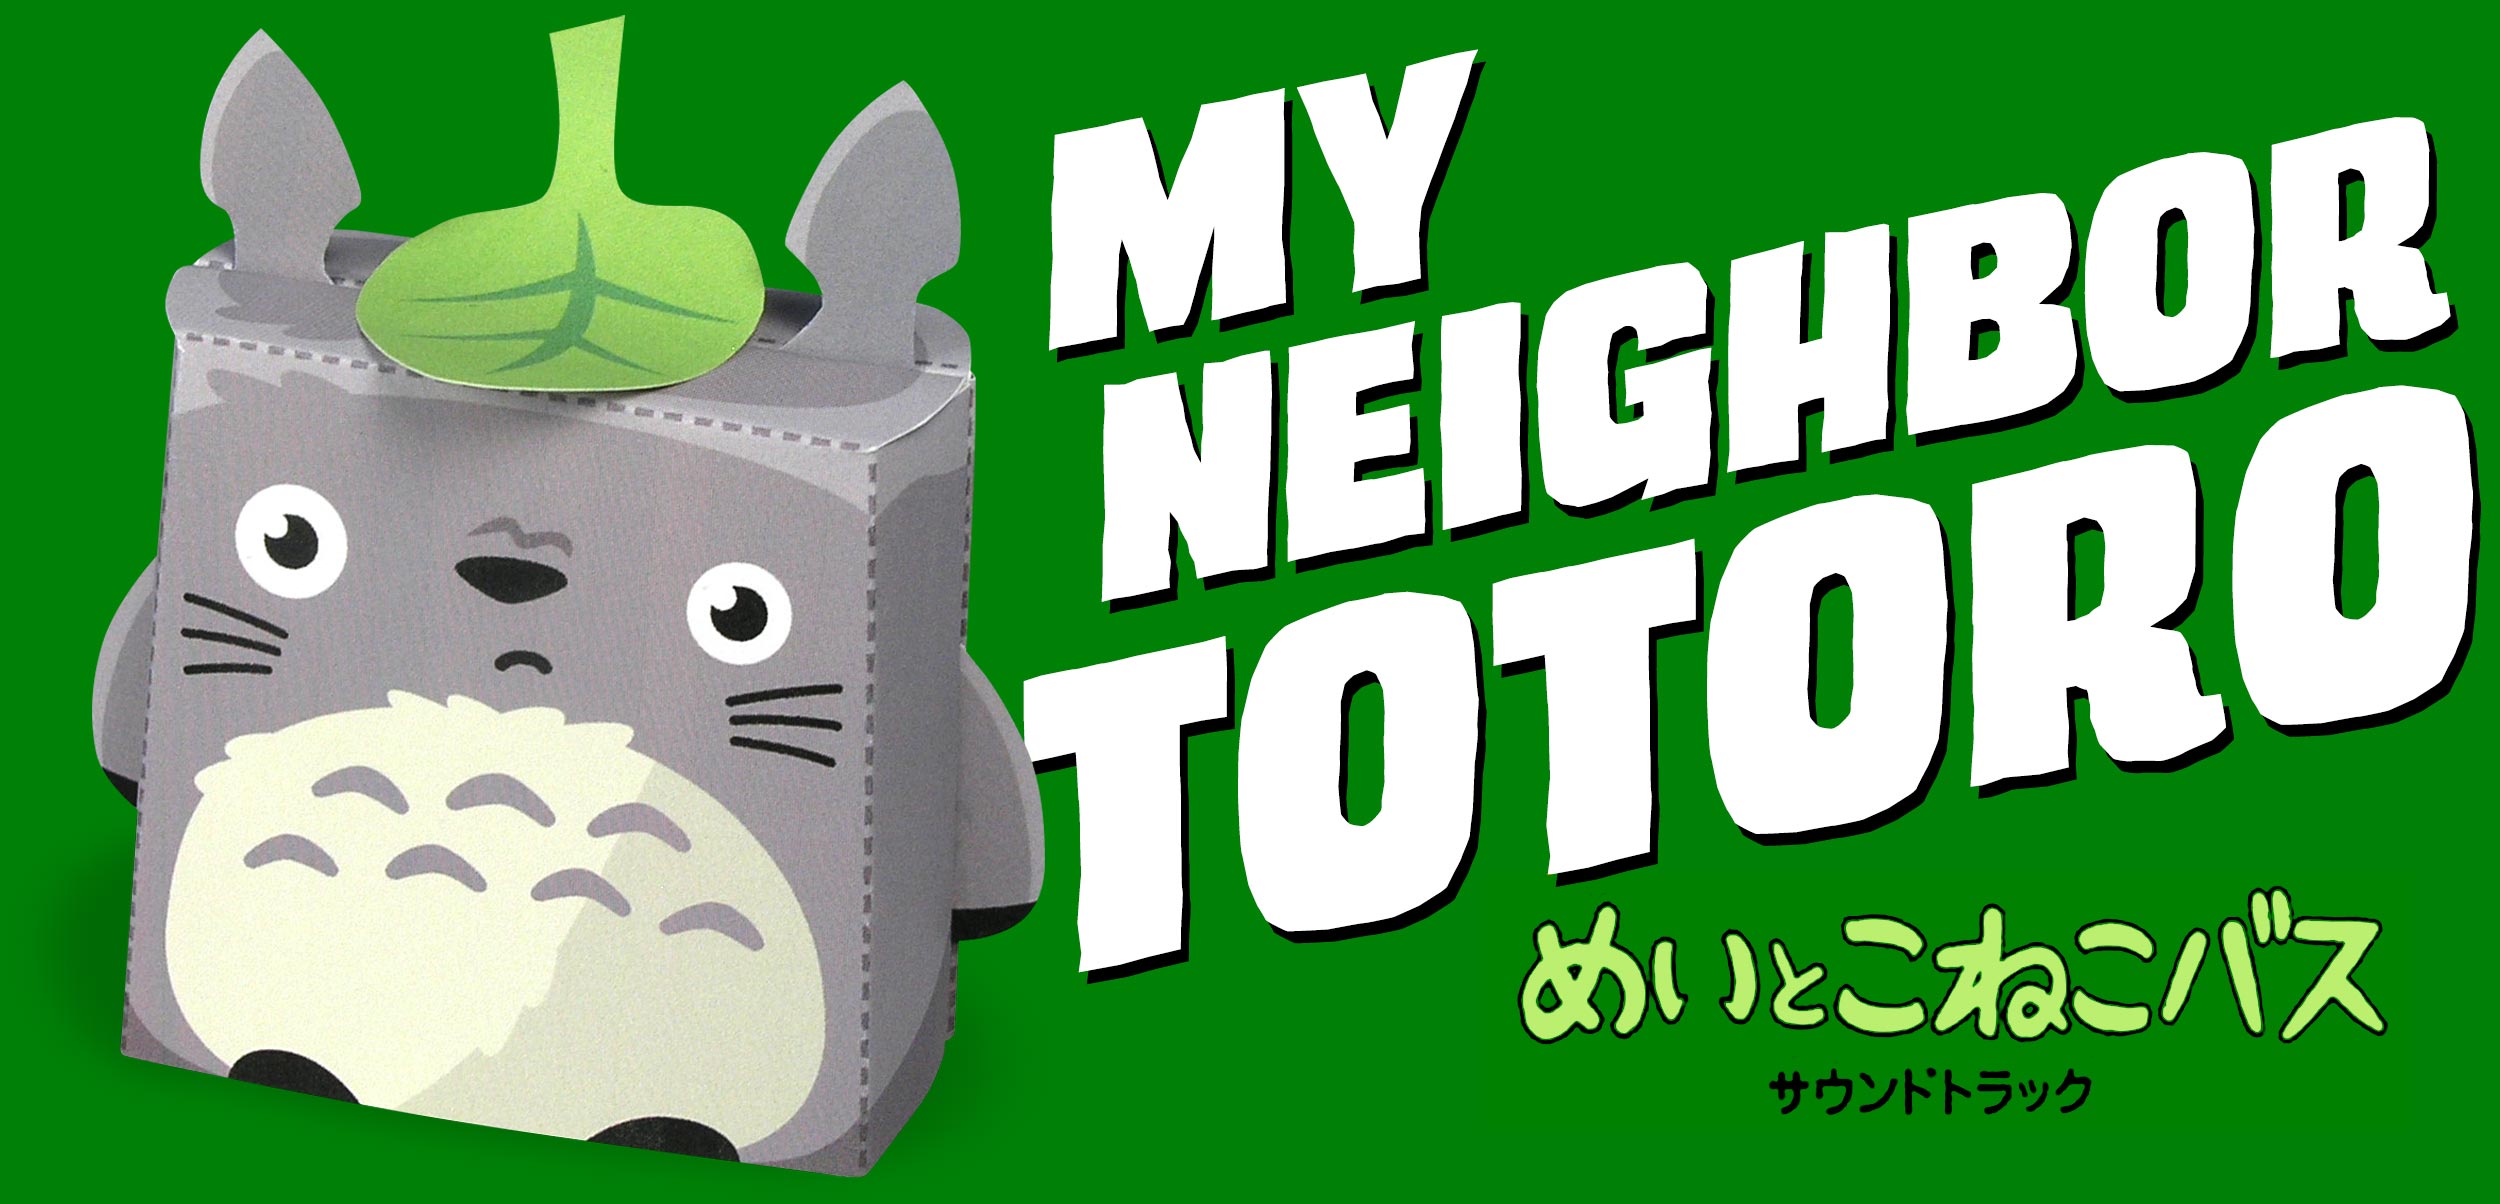 Totoro Kooky Craftables Paper Craft